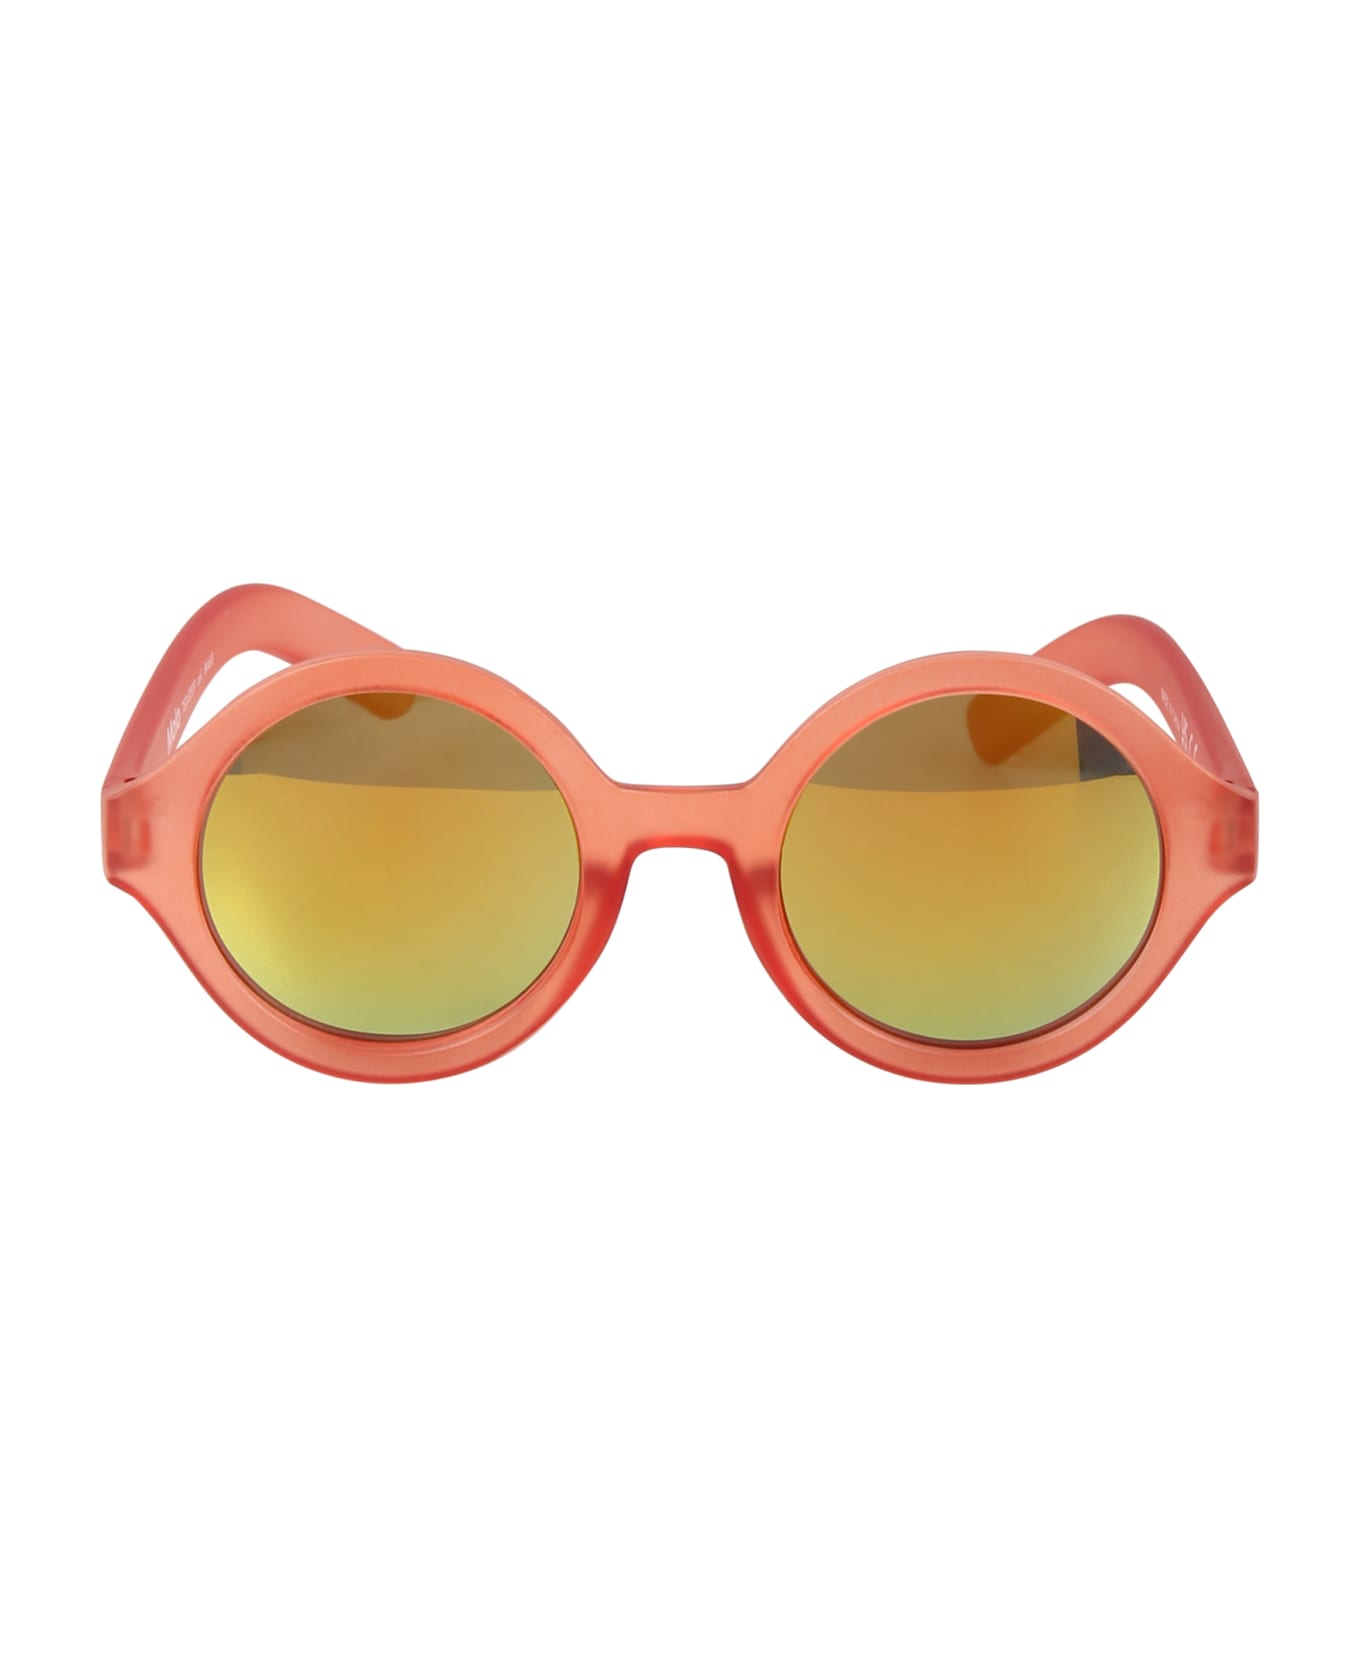 Molo Red Shelby Sunglasses For Girl - Fuchsia